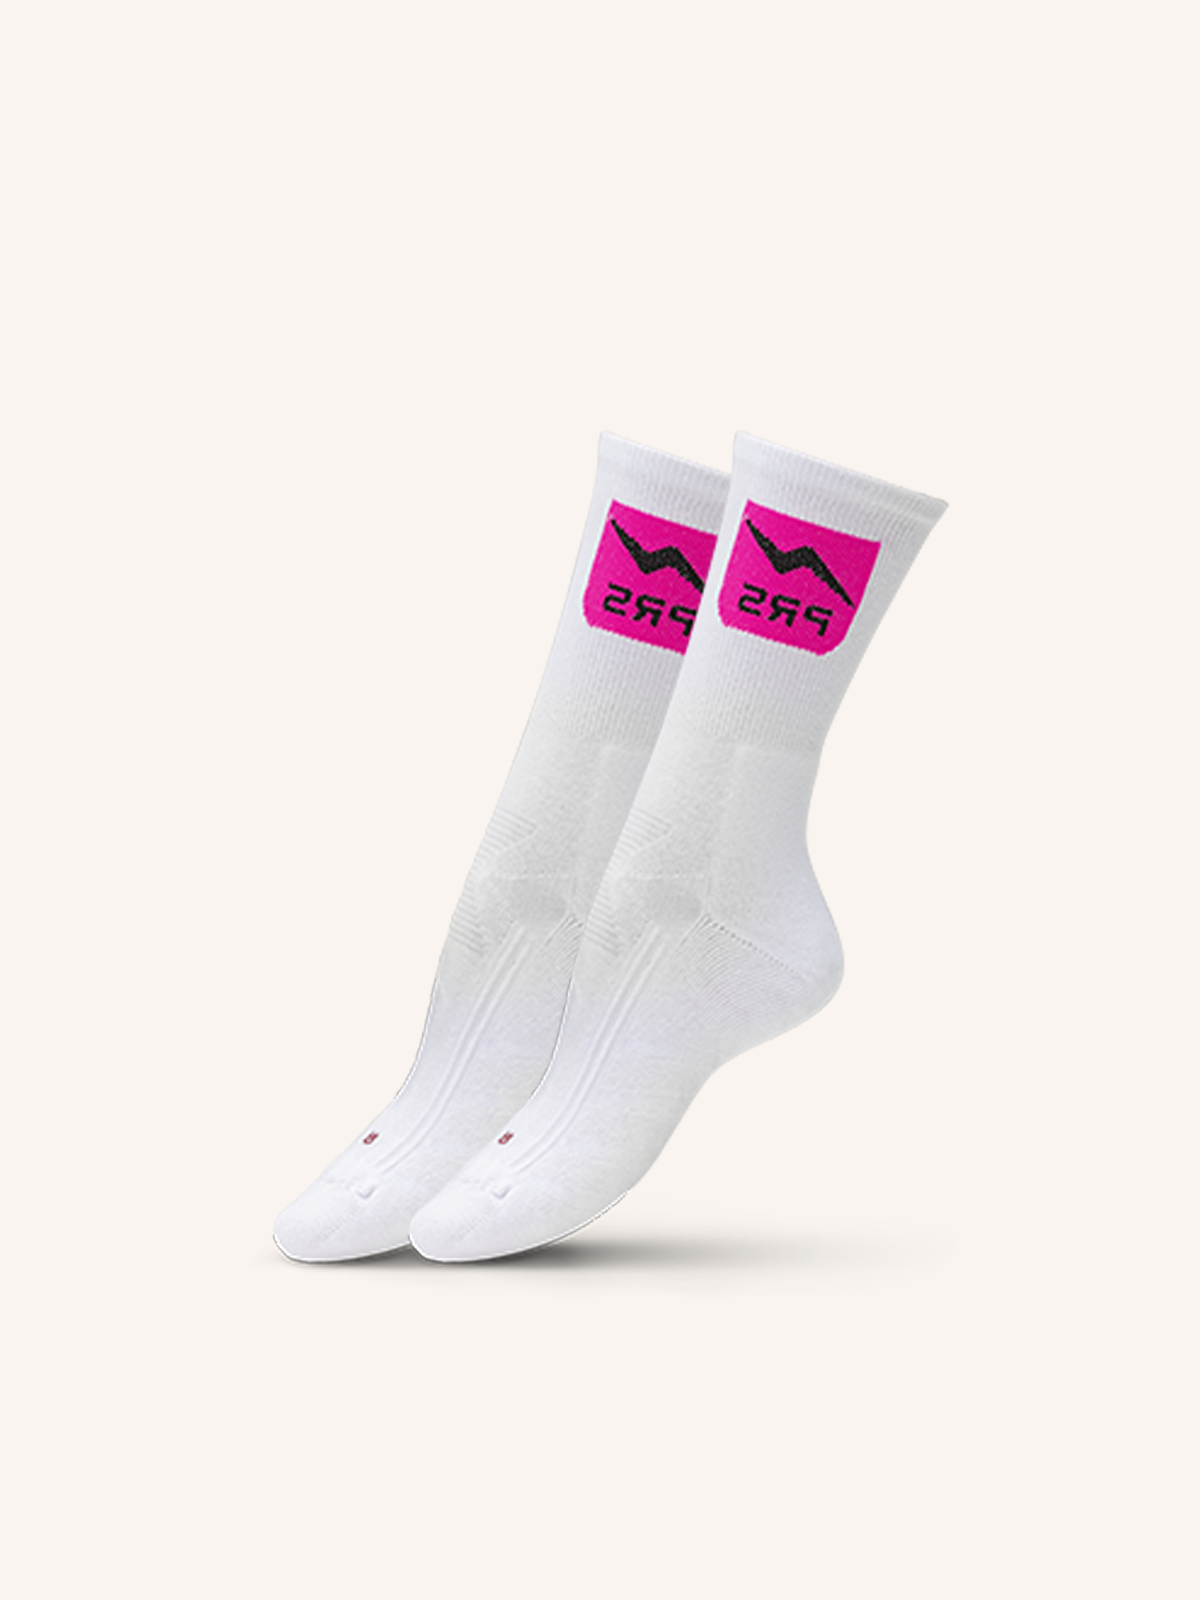 Short Cotton Socks for Women for Tennis | Plain Color | Pack of 2 Pairs | PRS PRO 01D